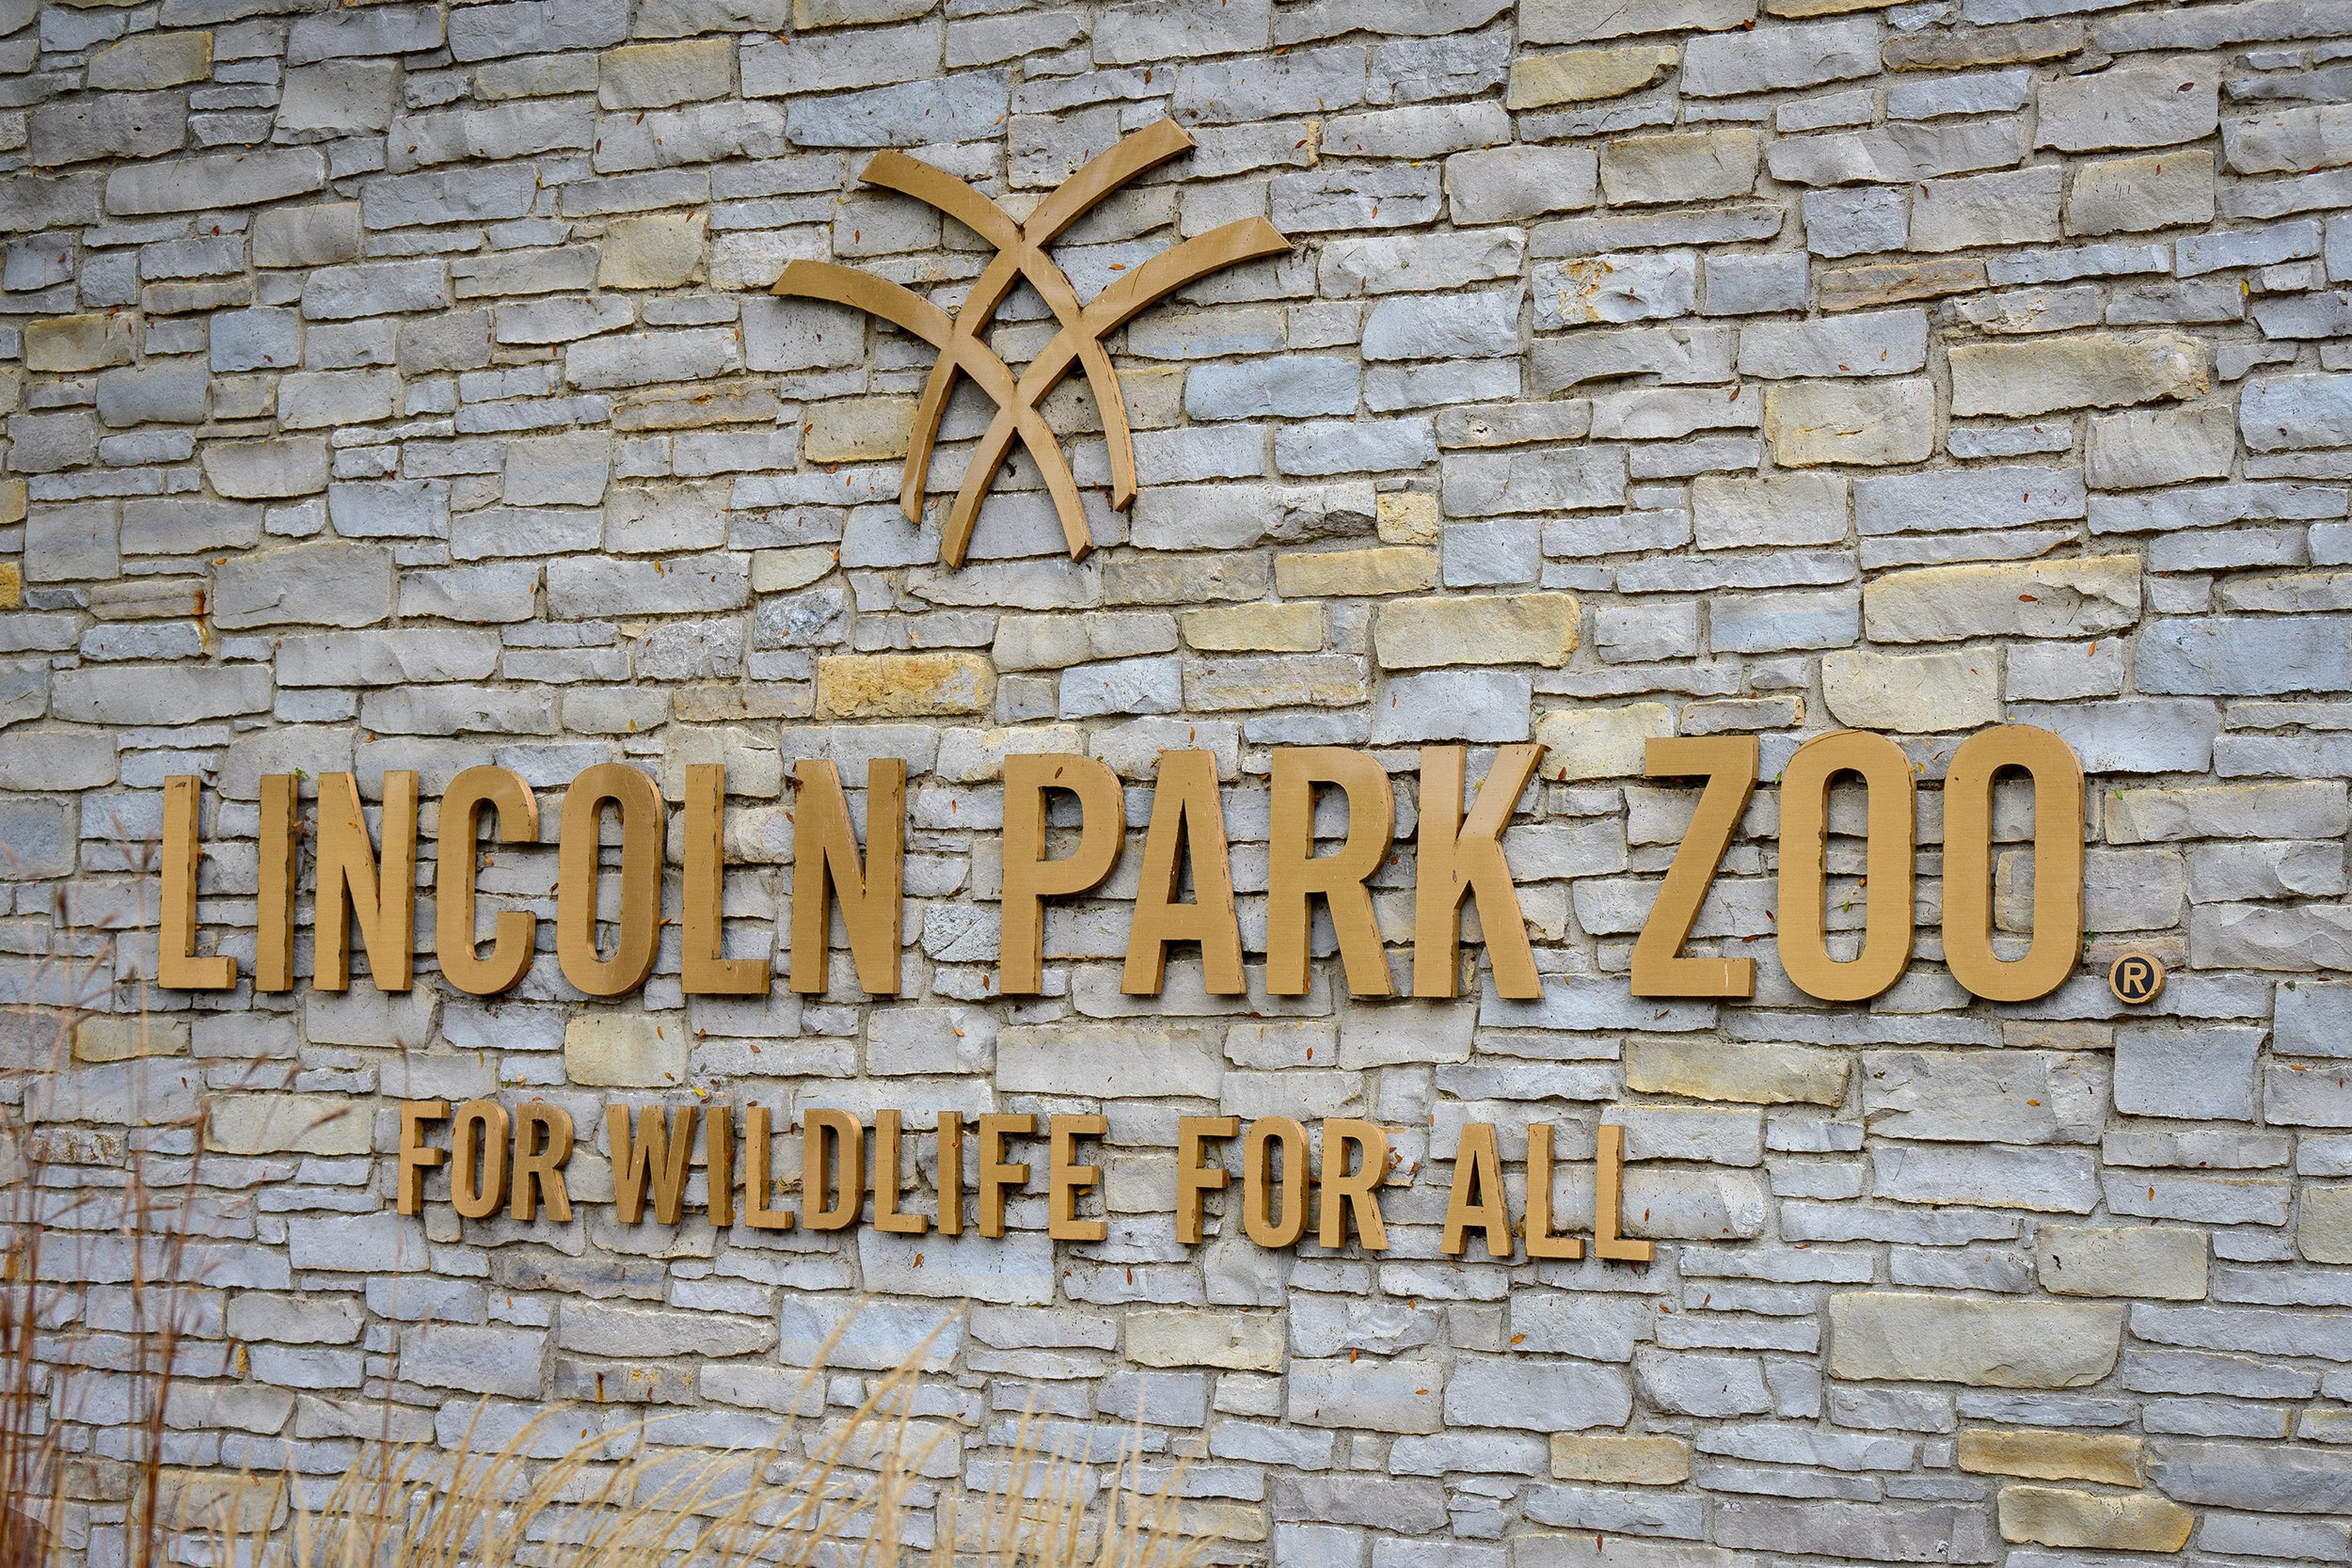 20211028 - Chicago Lincoln Park Zoo - 001.jpg